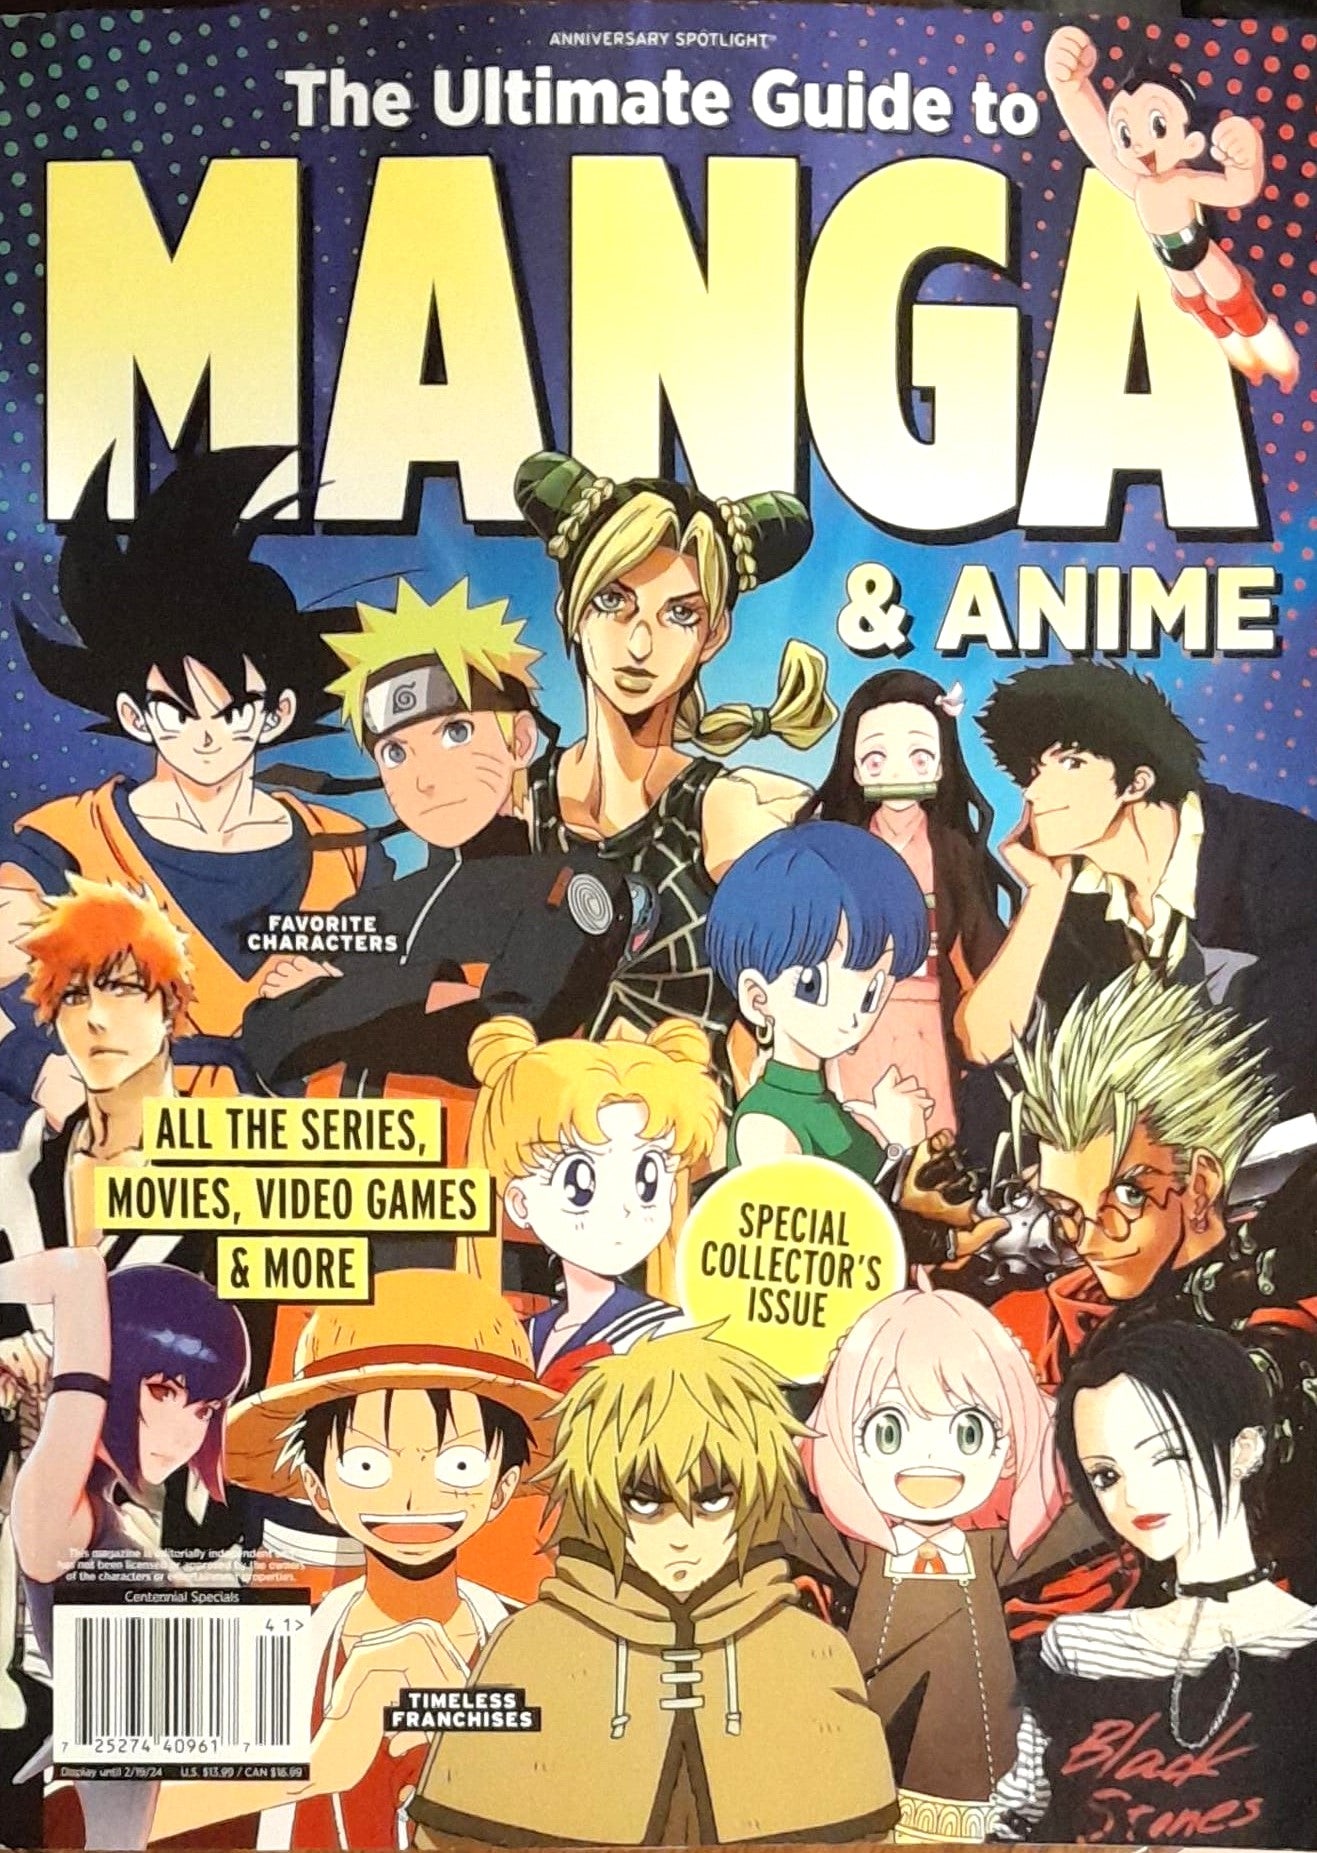 Manga Guide : What is Manga and Variants ?